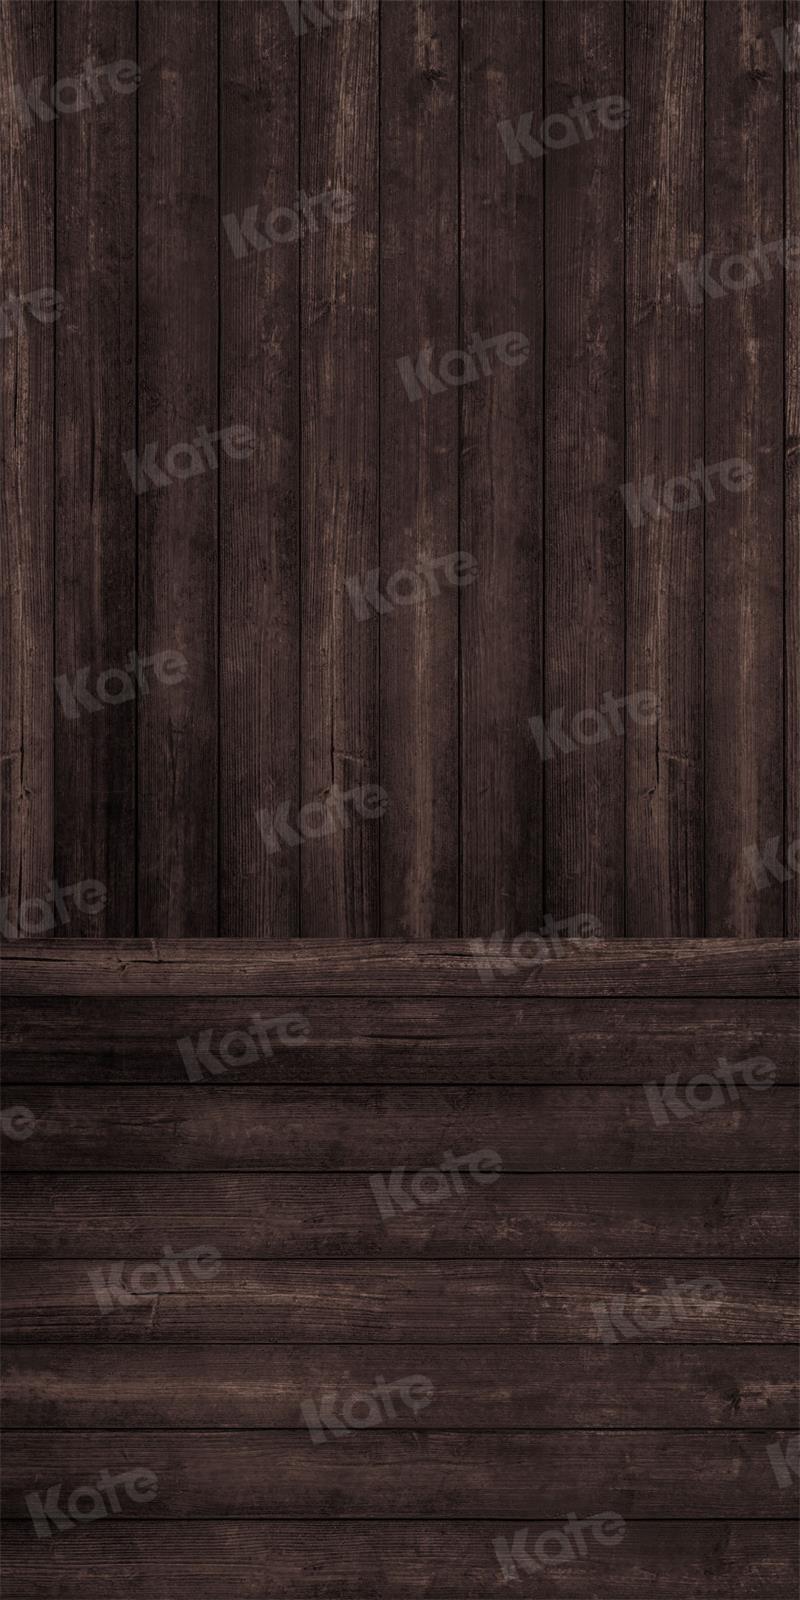 Kate Kombibackdrop Retro Dunkelbraun Hintergrund Porträt